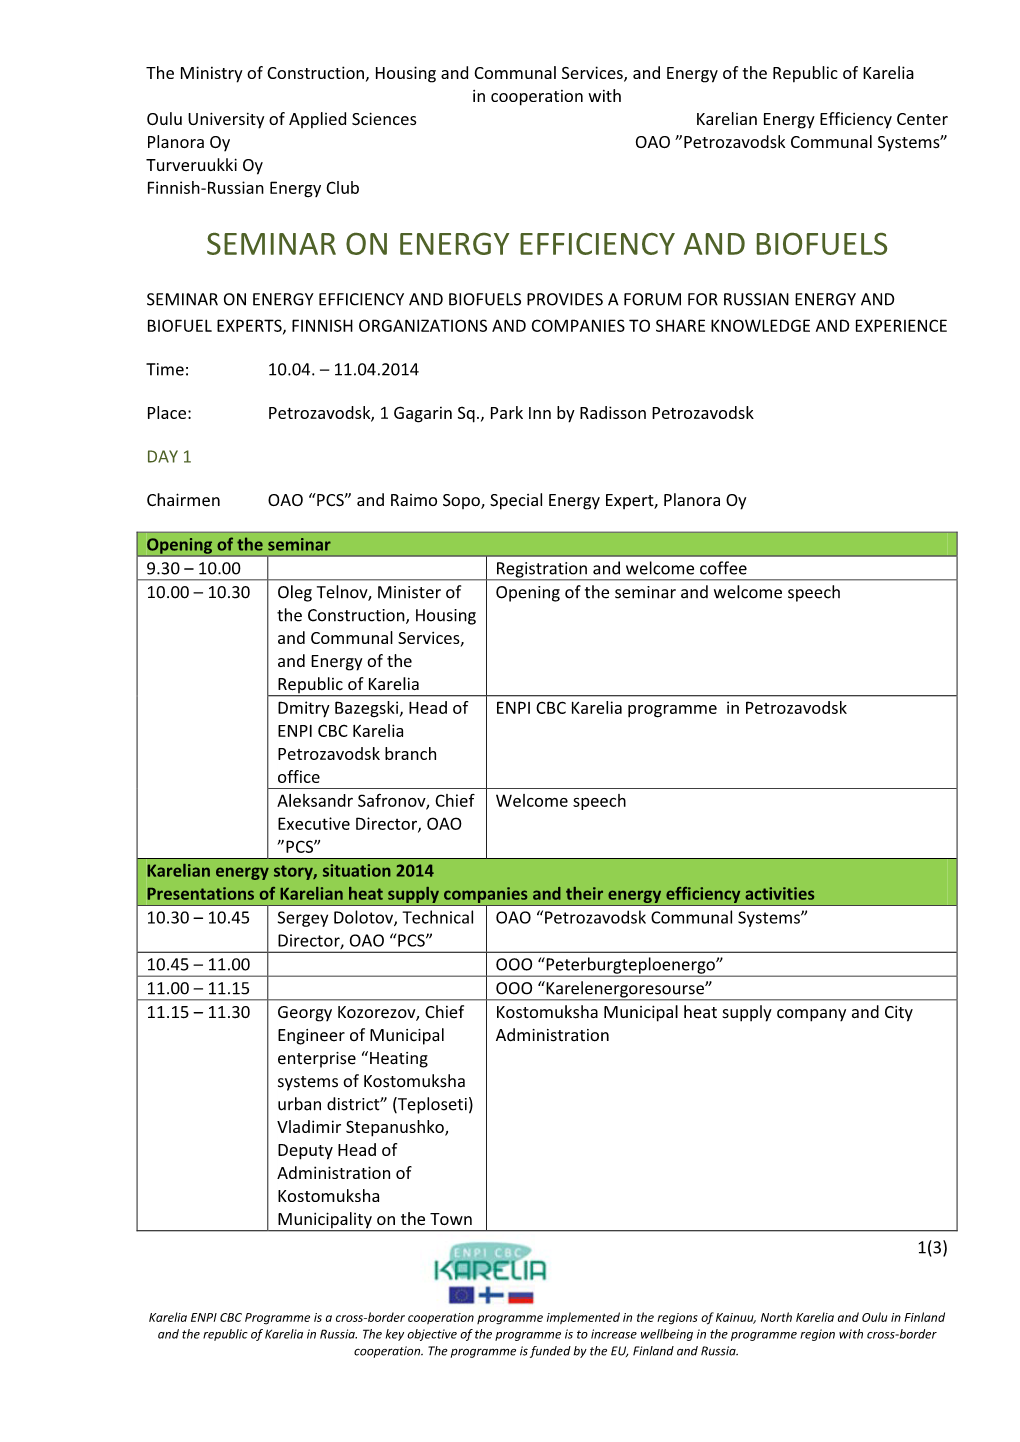 Seminar on Energy Efficiency and Biofuels